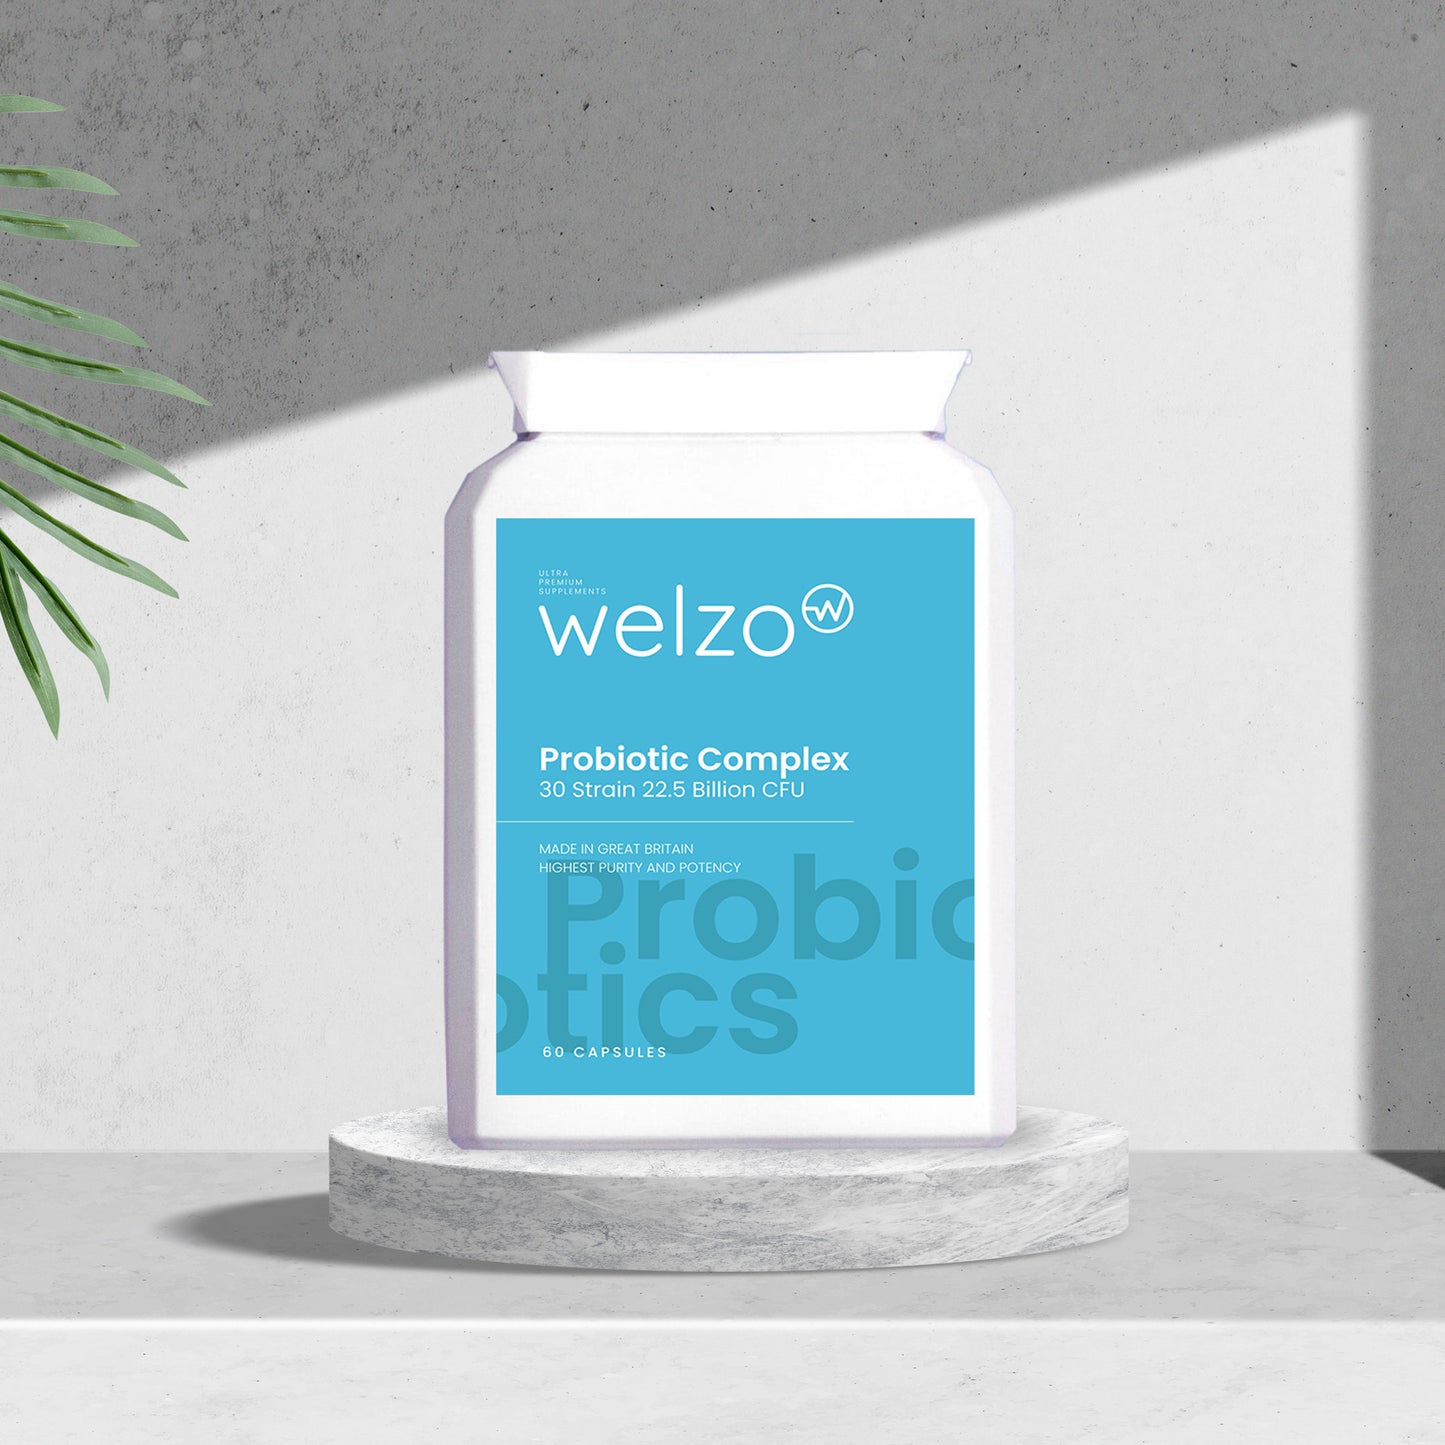 Welzo Probiotic Complex 60 Capsules - 30 Strain 22.5 Billion CFU